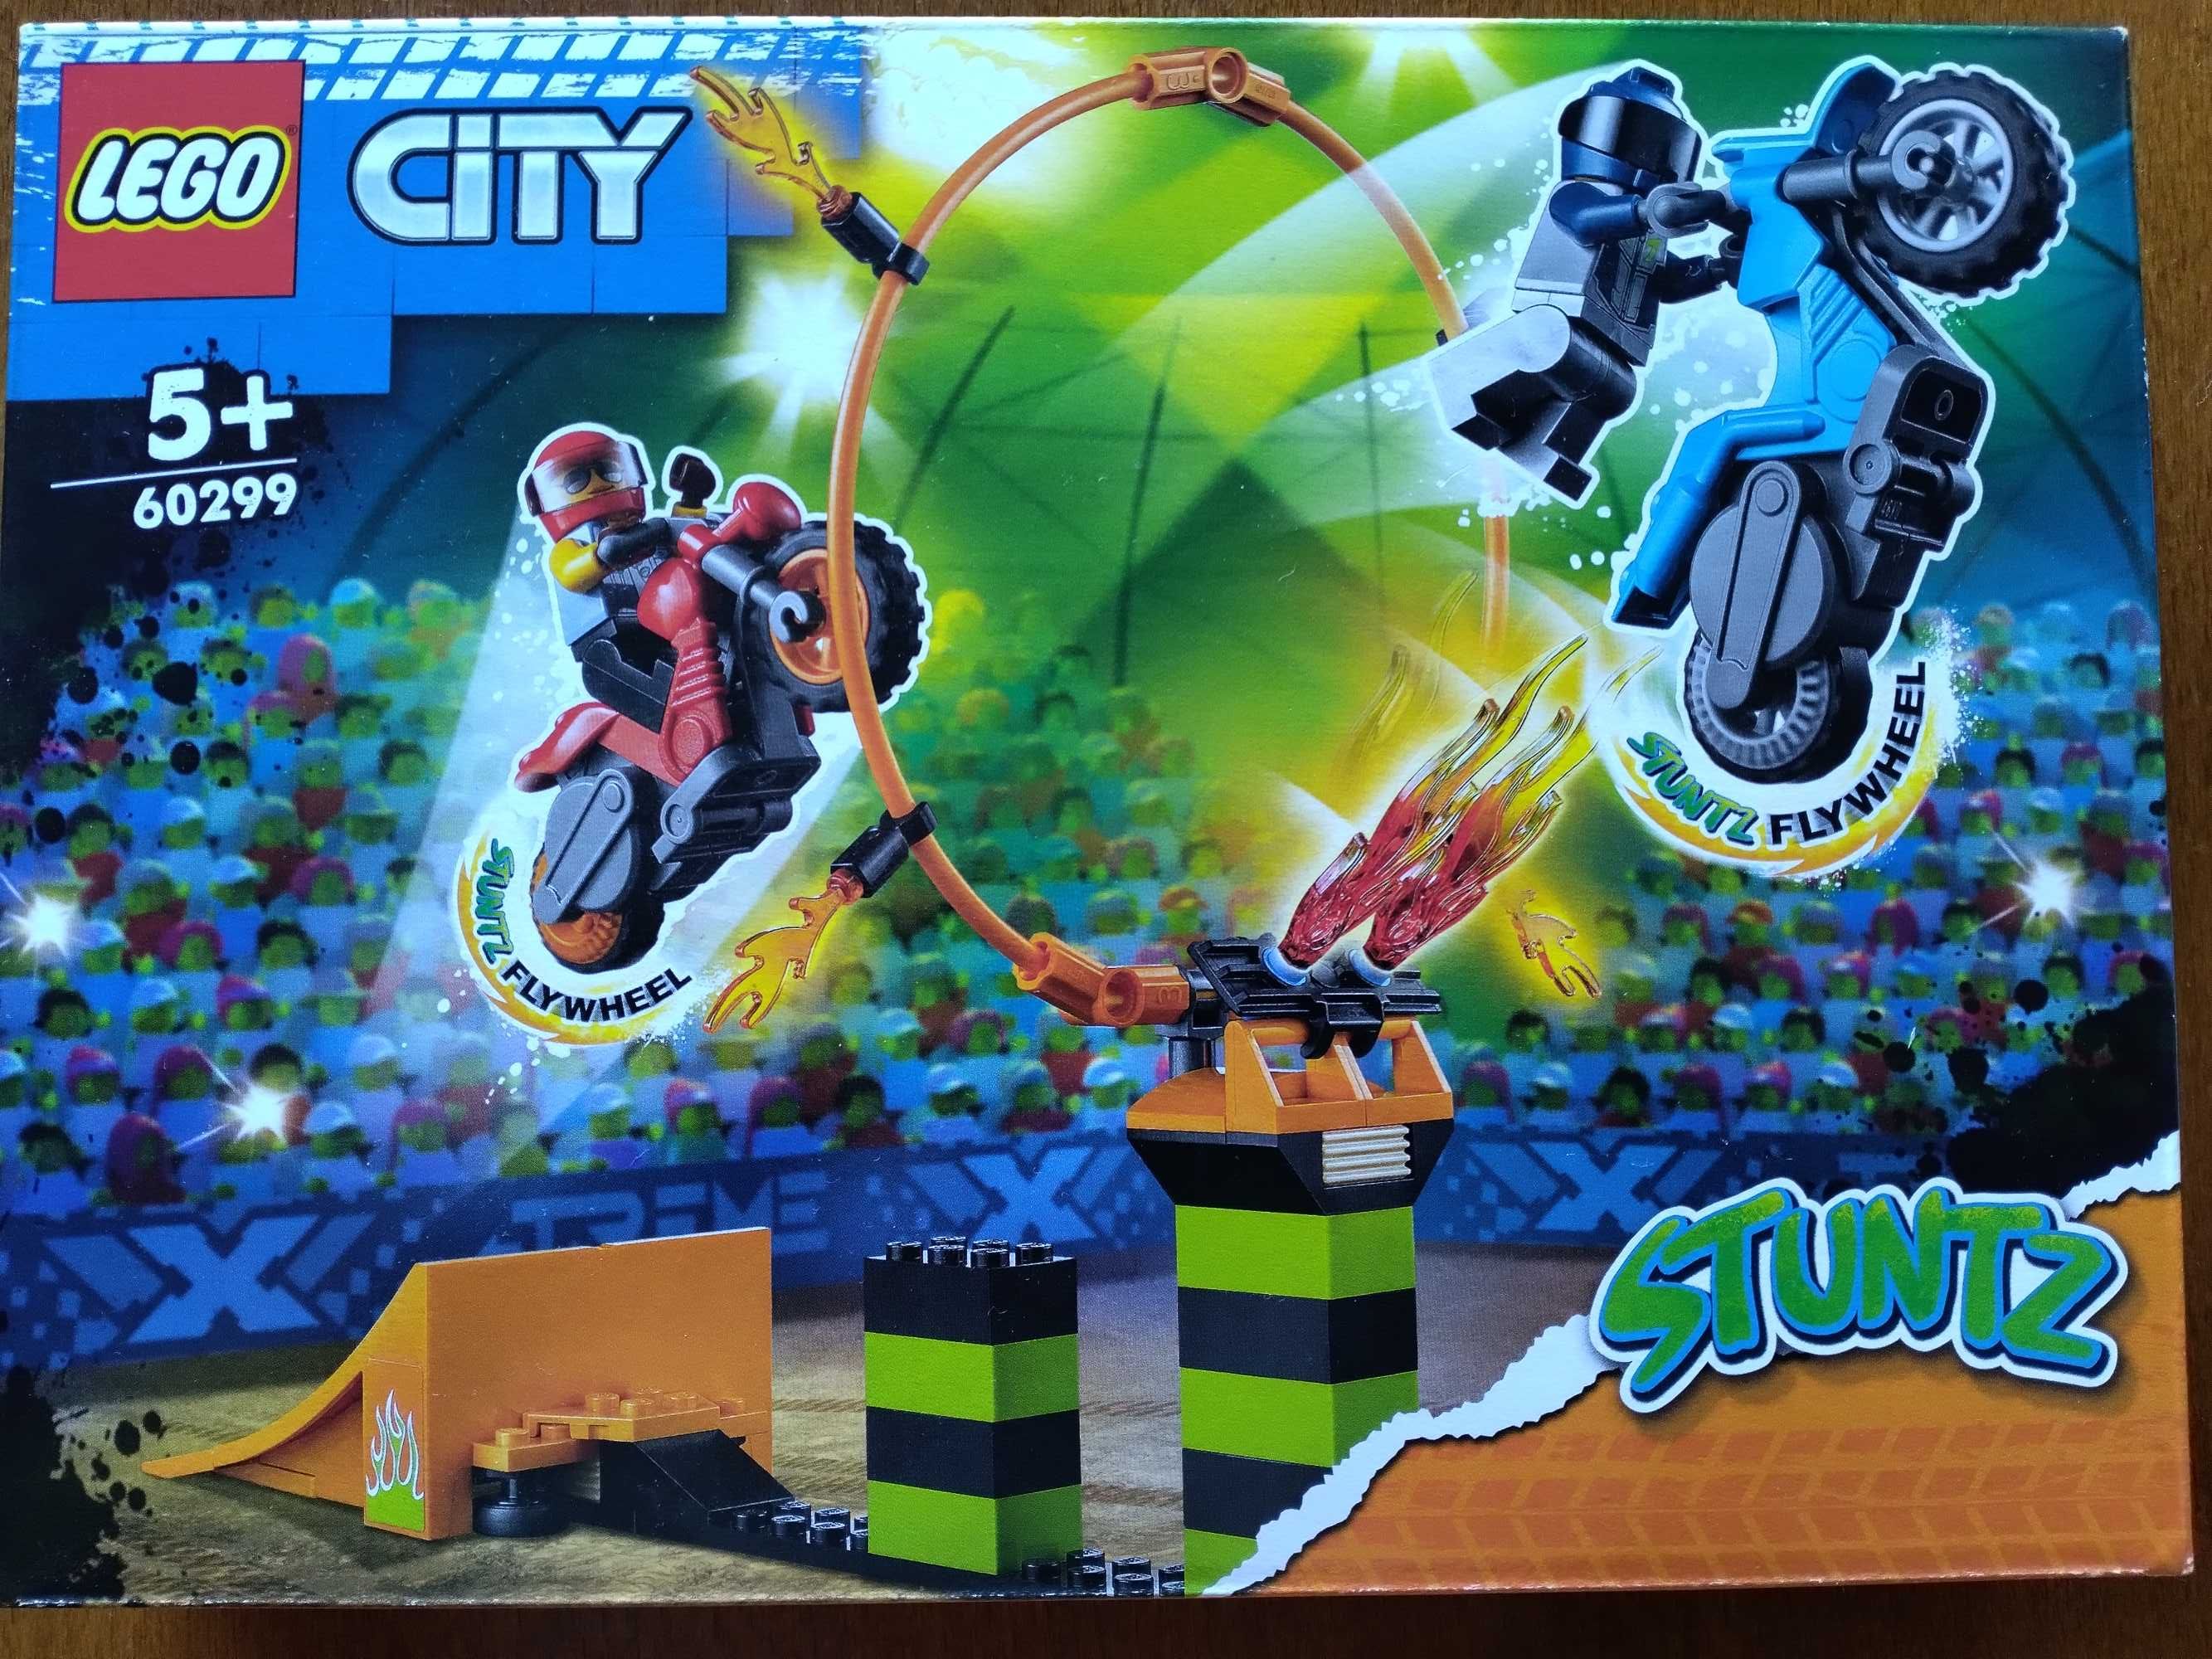 Lego City 60299 Stuntz